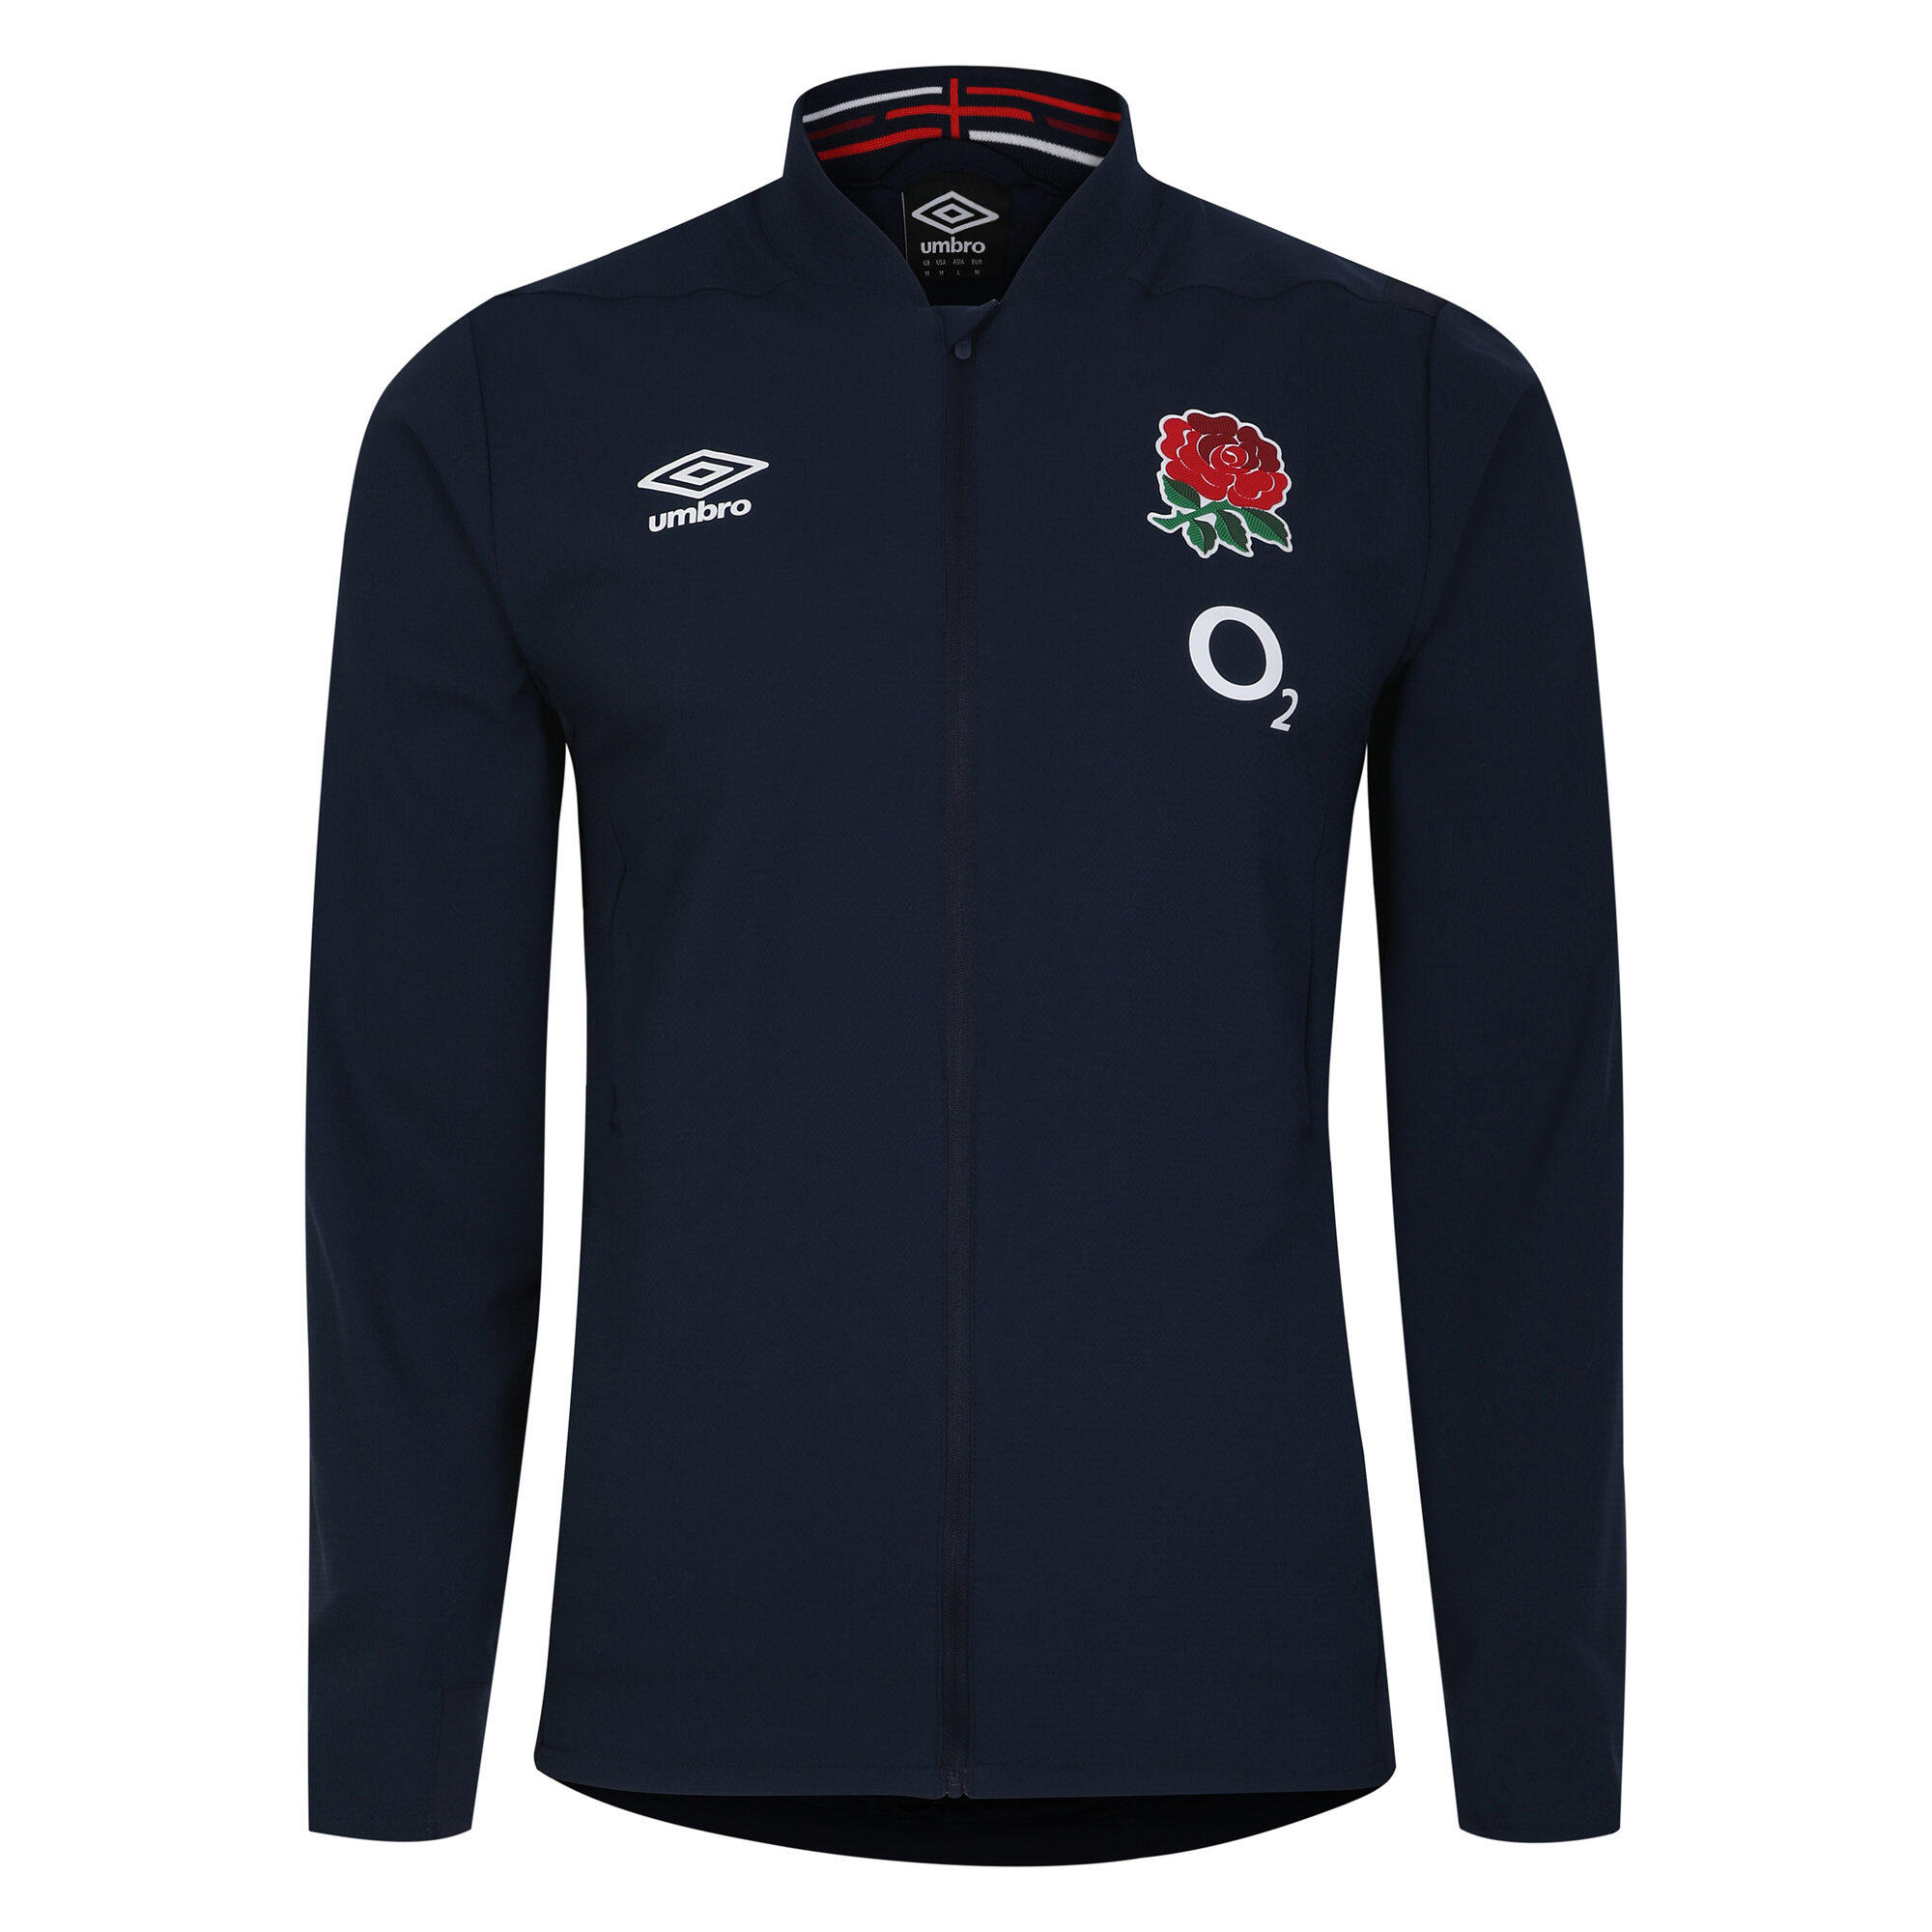 UMBRO Mens 23/24 England Rugby Anthem Jacket (Navy Blazer)